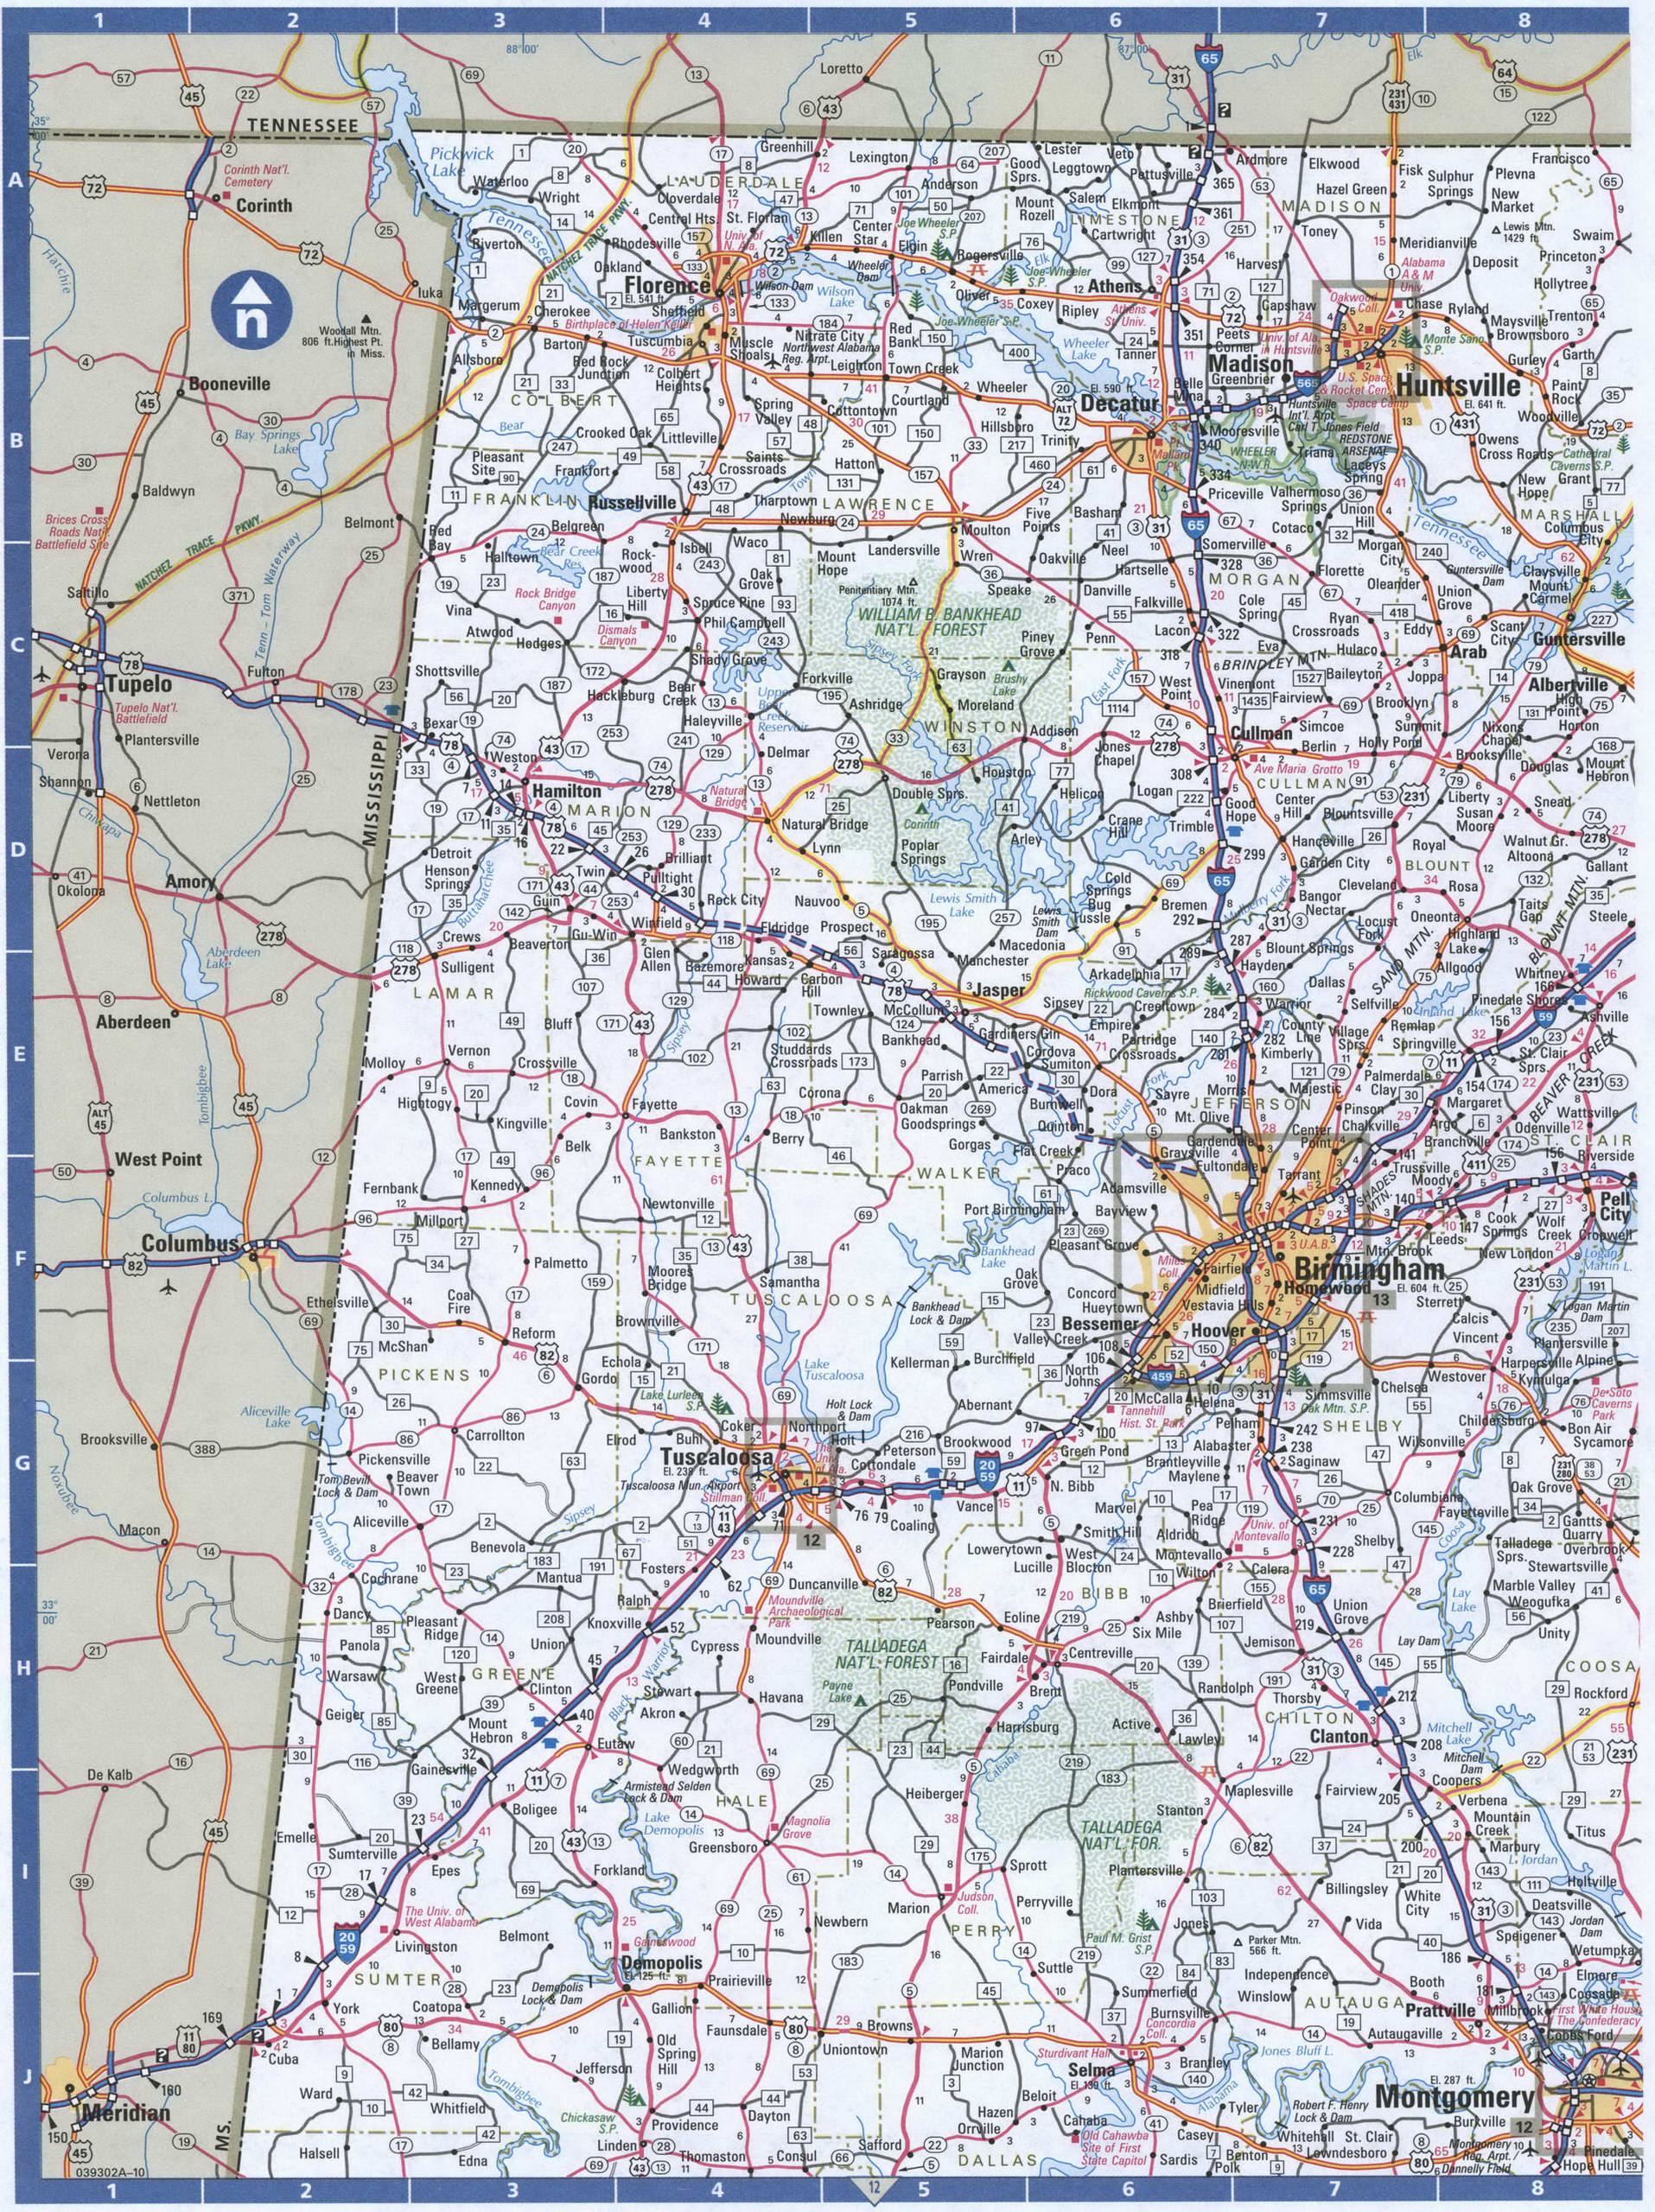 North Alabama detailed map